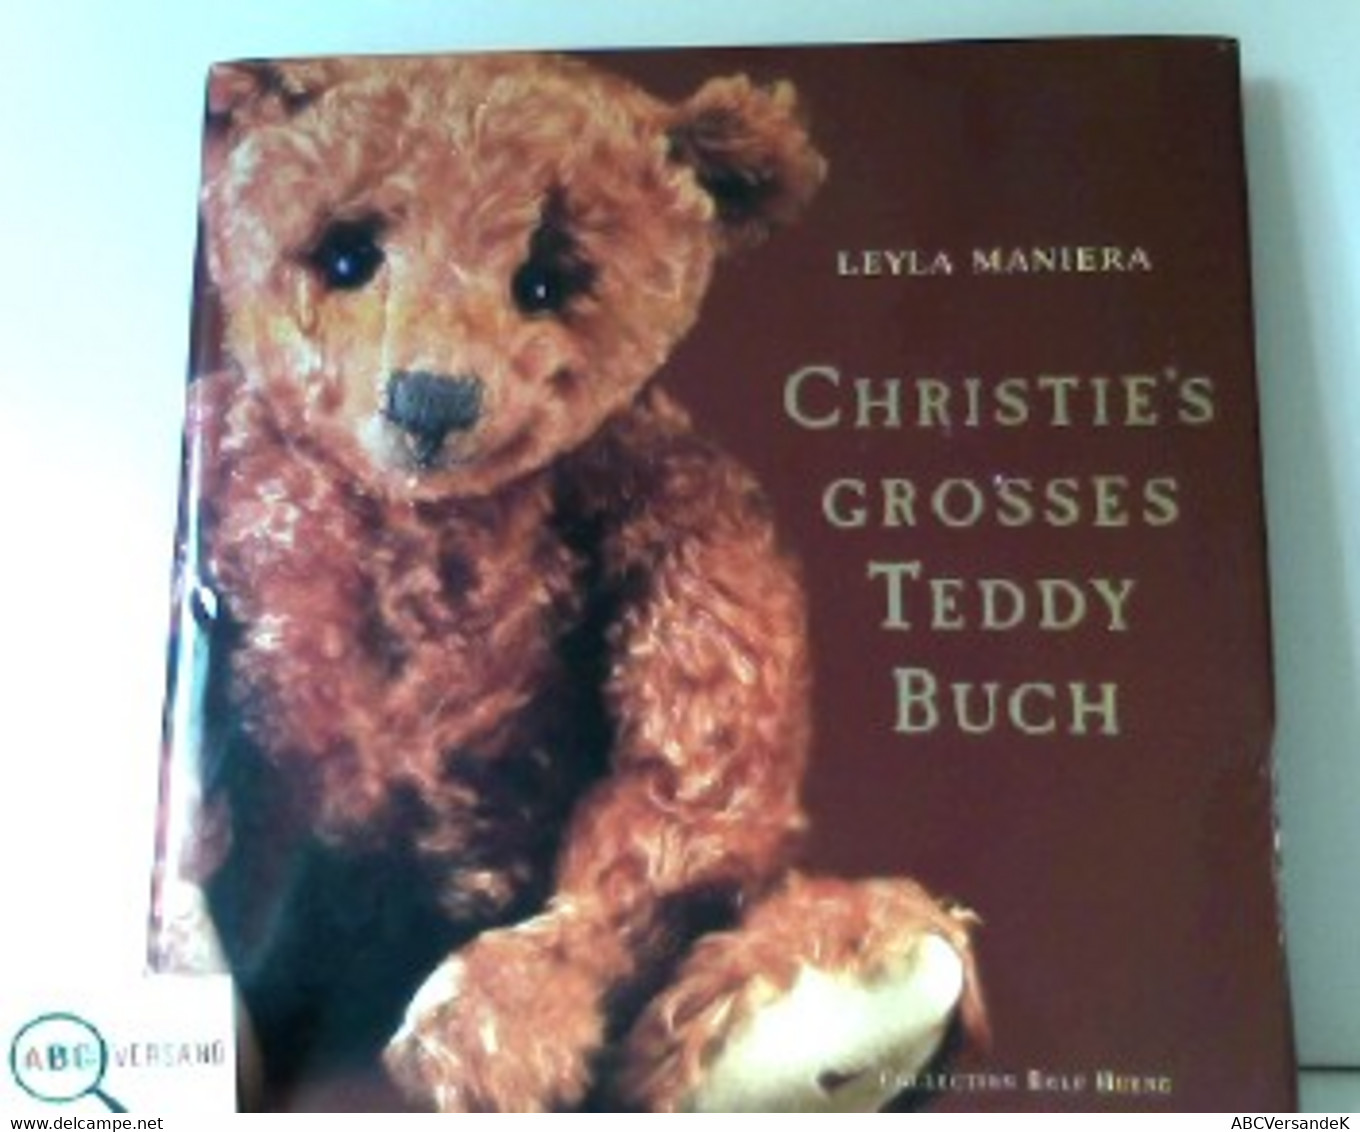 Christie's Grosses Teddy Buch. - Rare